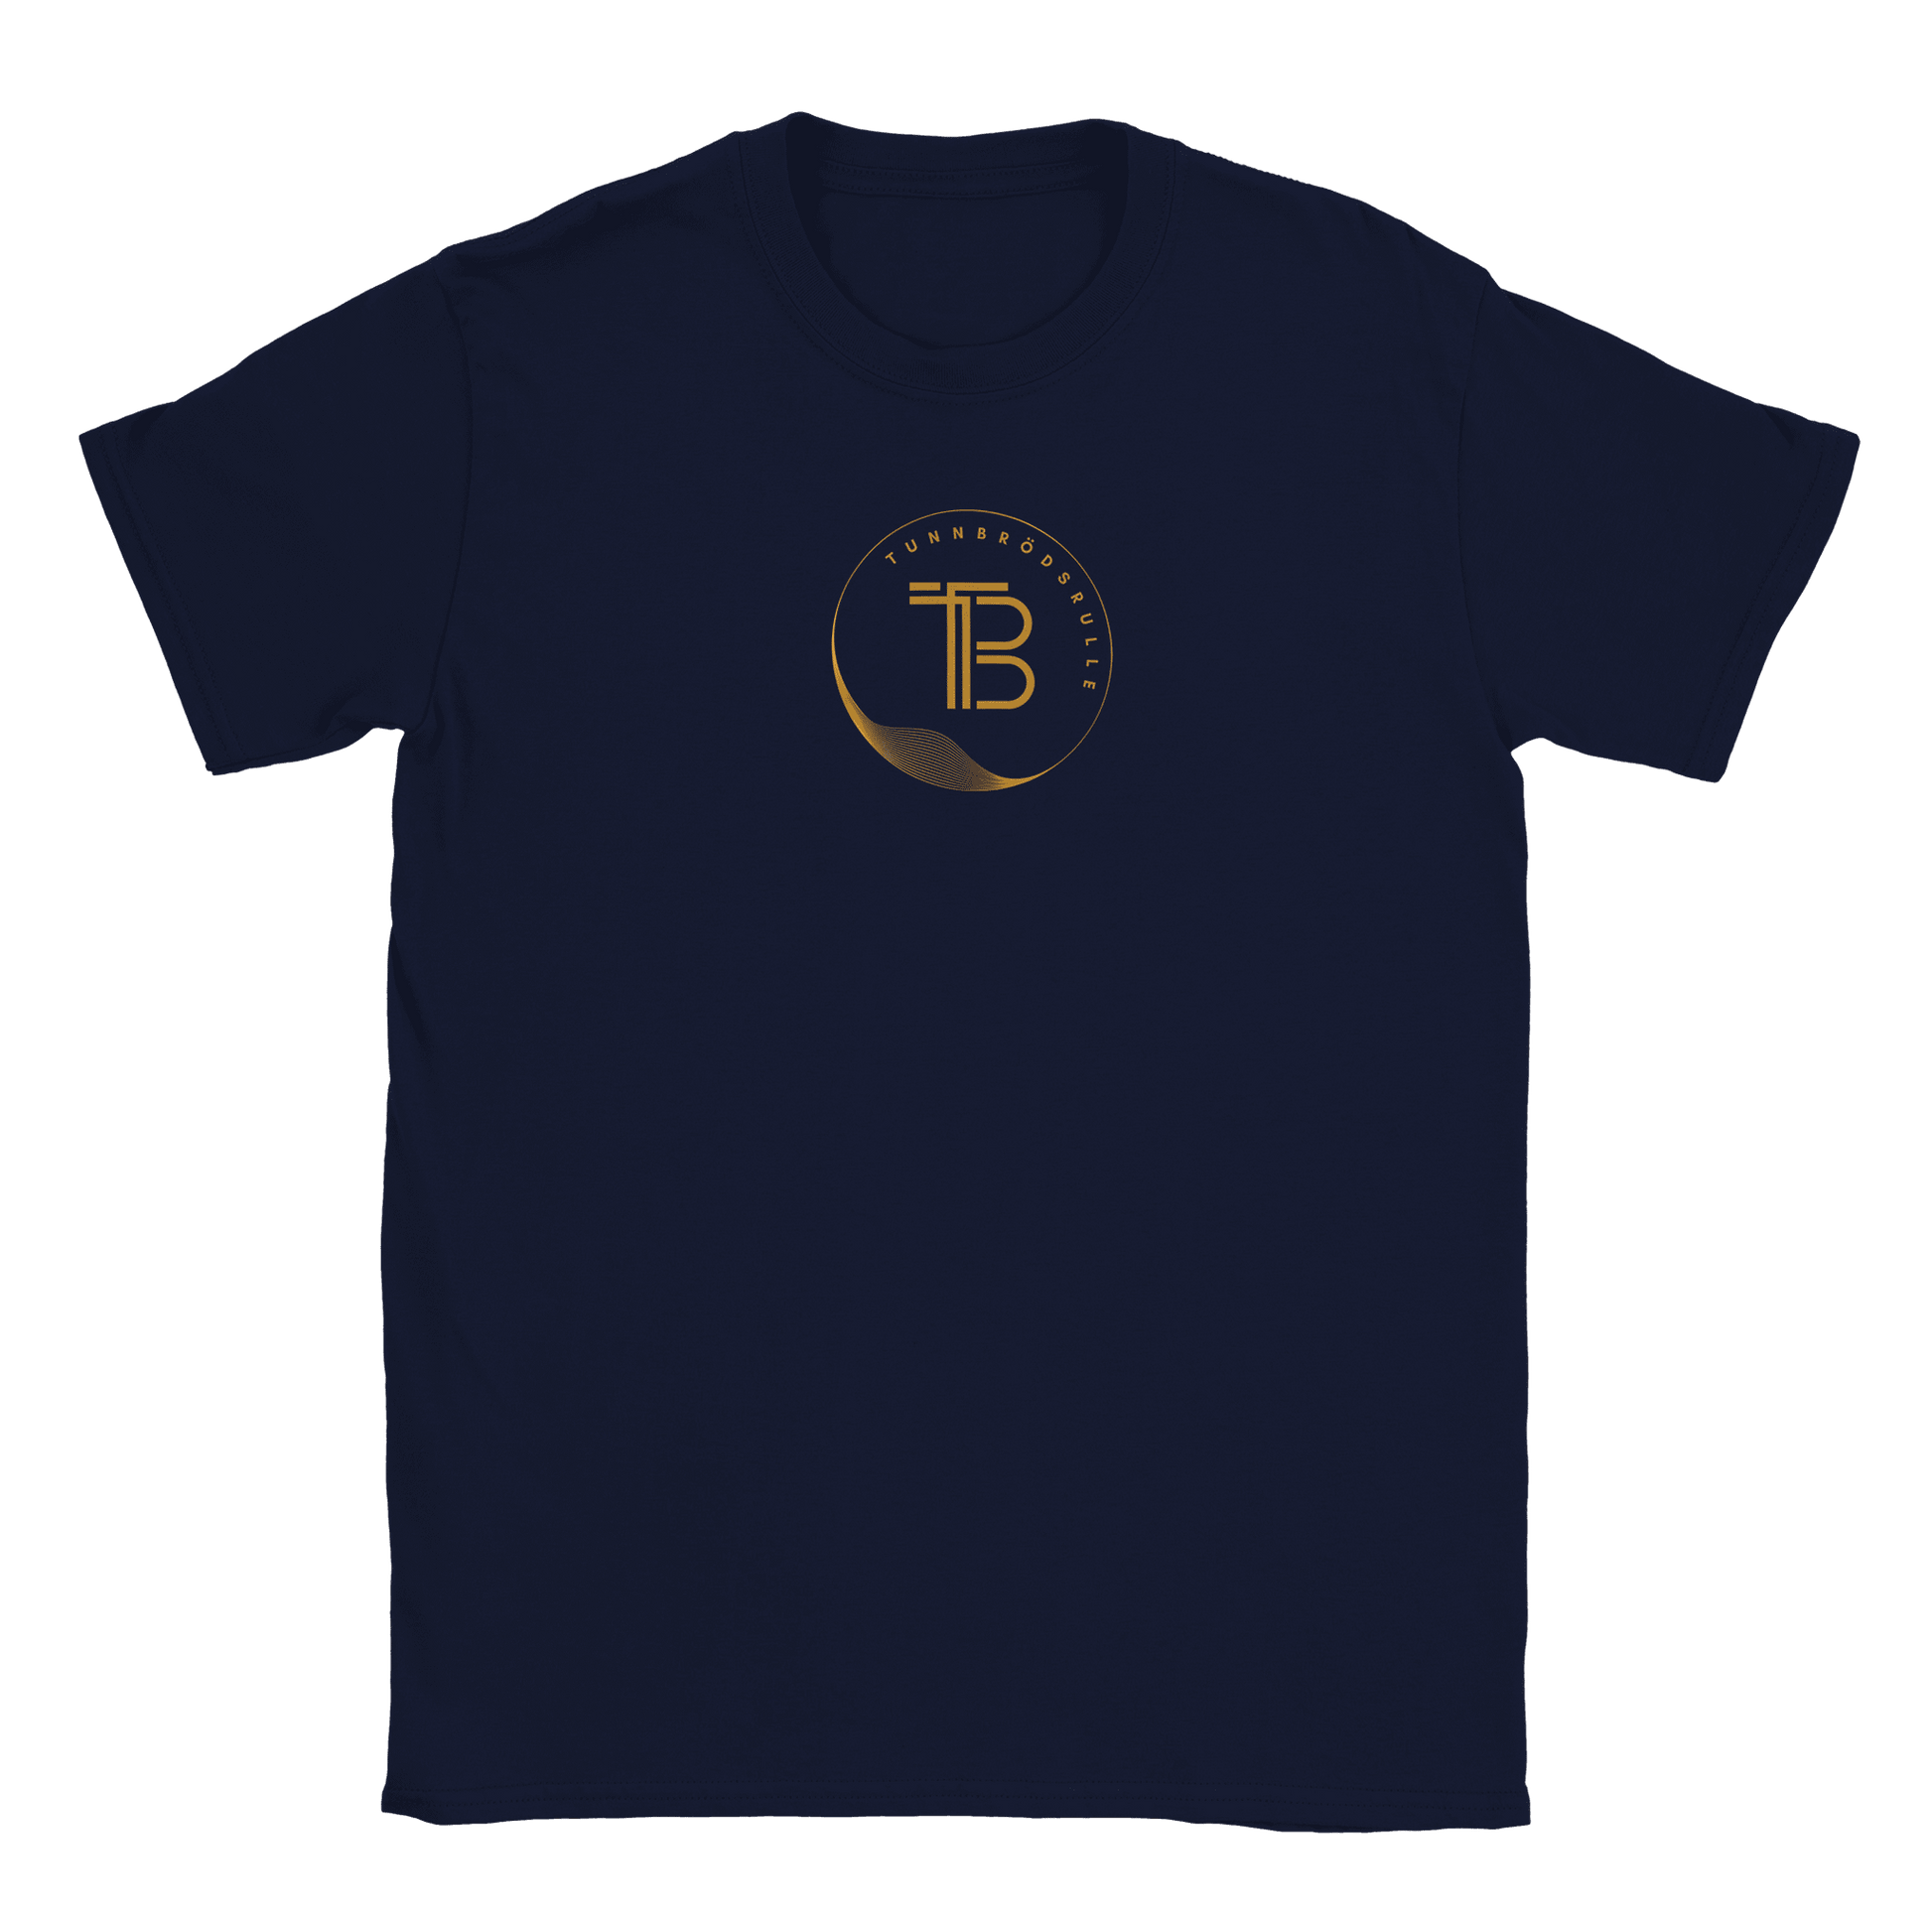 Tunnbrödsrulle - T-shirt Marinblå